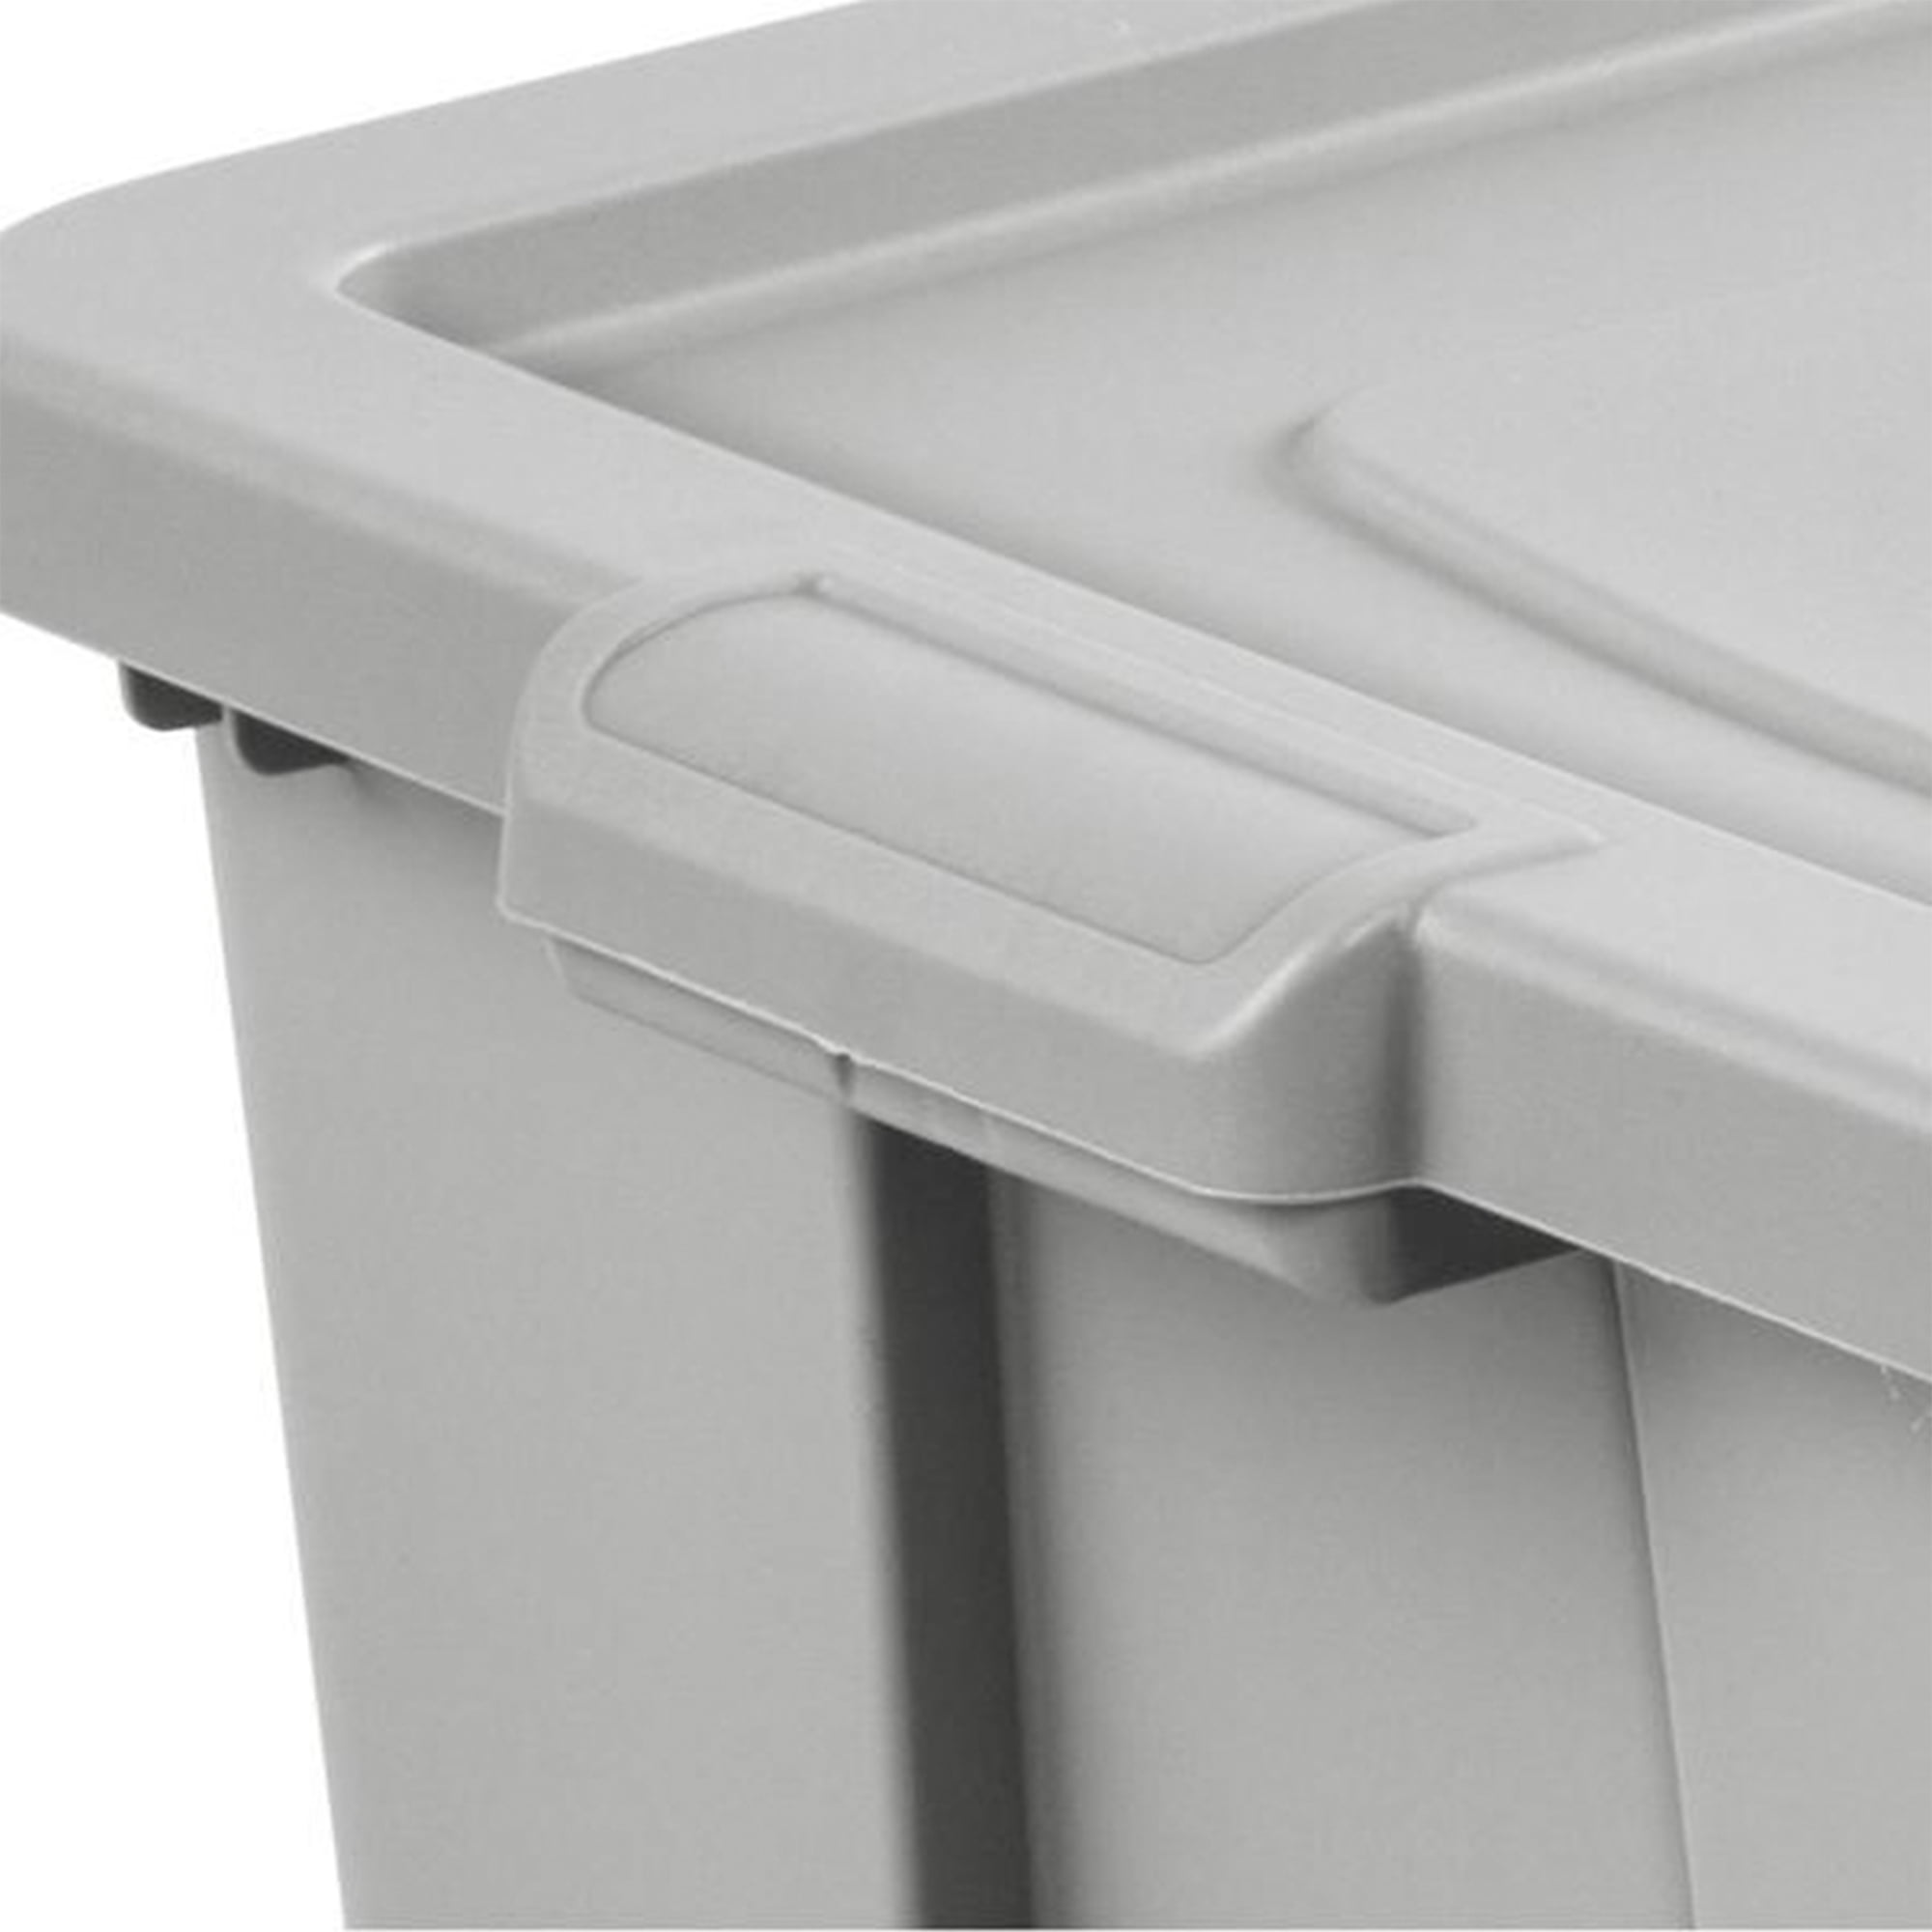 Sterilite Tuff1 30 Gal Plastic Storage Tote Container Bin w/ Lid (8 Pack) - 2